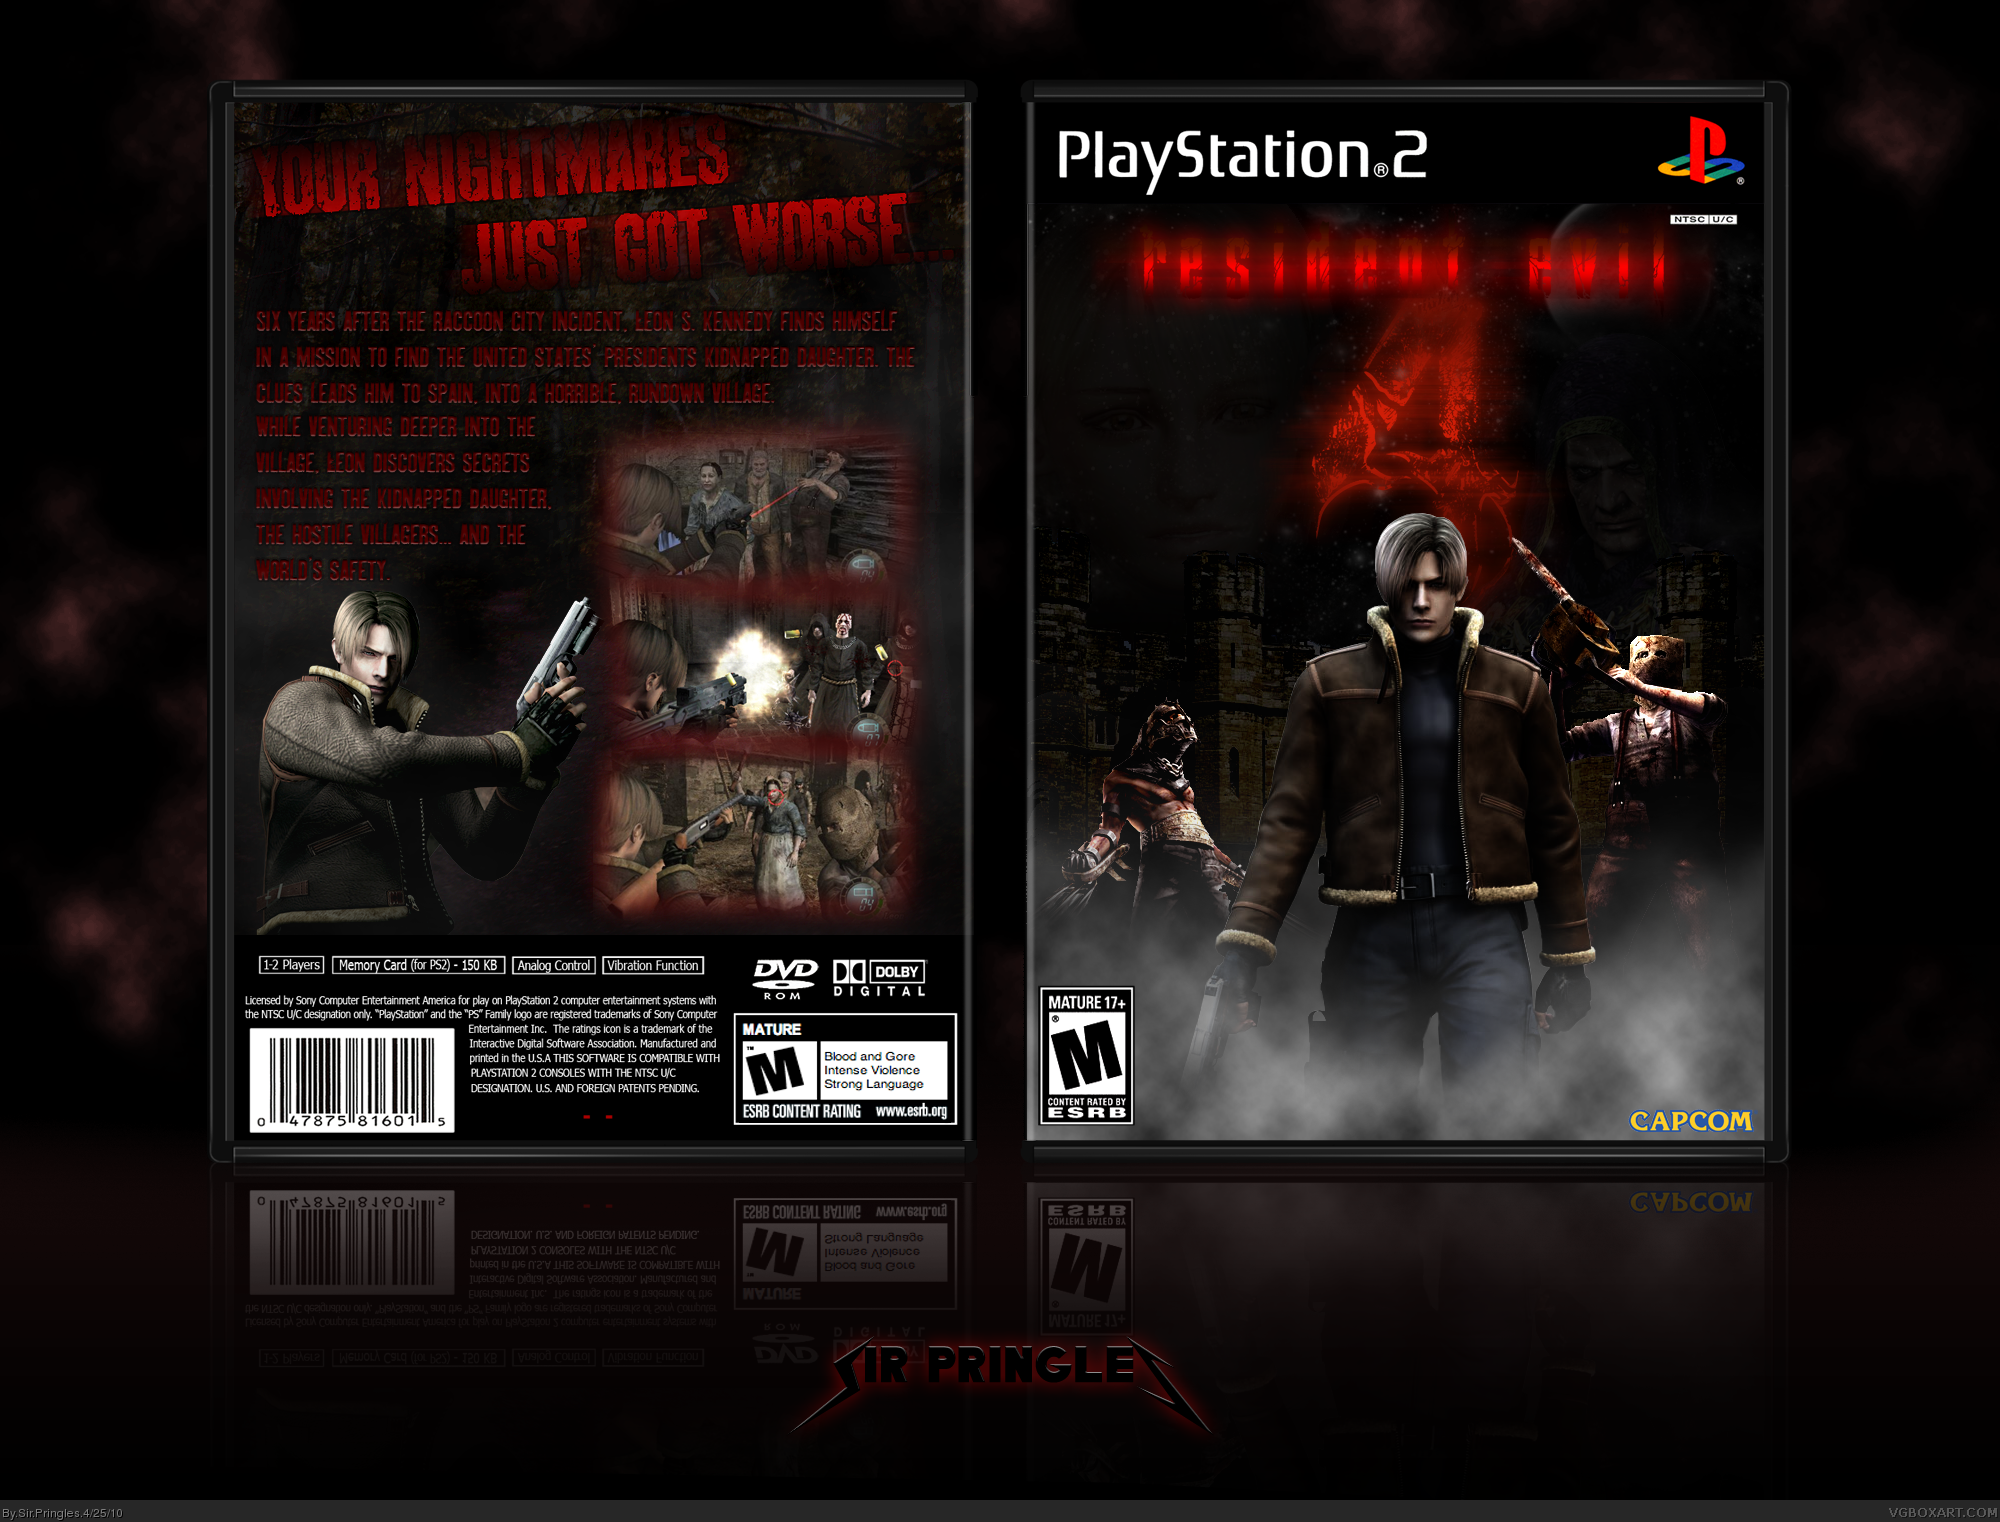 Обложка диска Resident Evil 4 ps2. PLAYSTATION 4 Resident Evil 2. Resident Evil 4 Box. Resident Evil 4 PLAYSTATION 2 обложка.